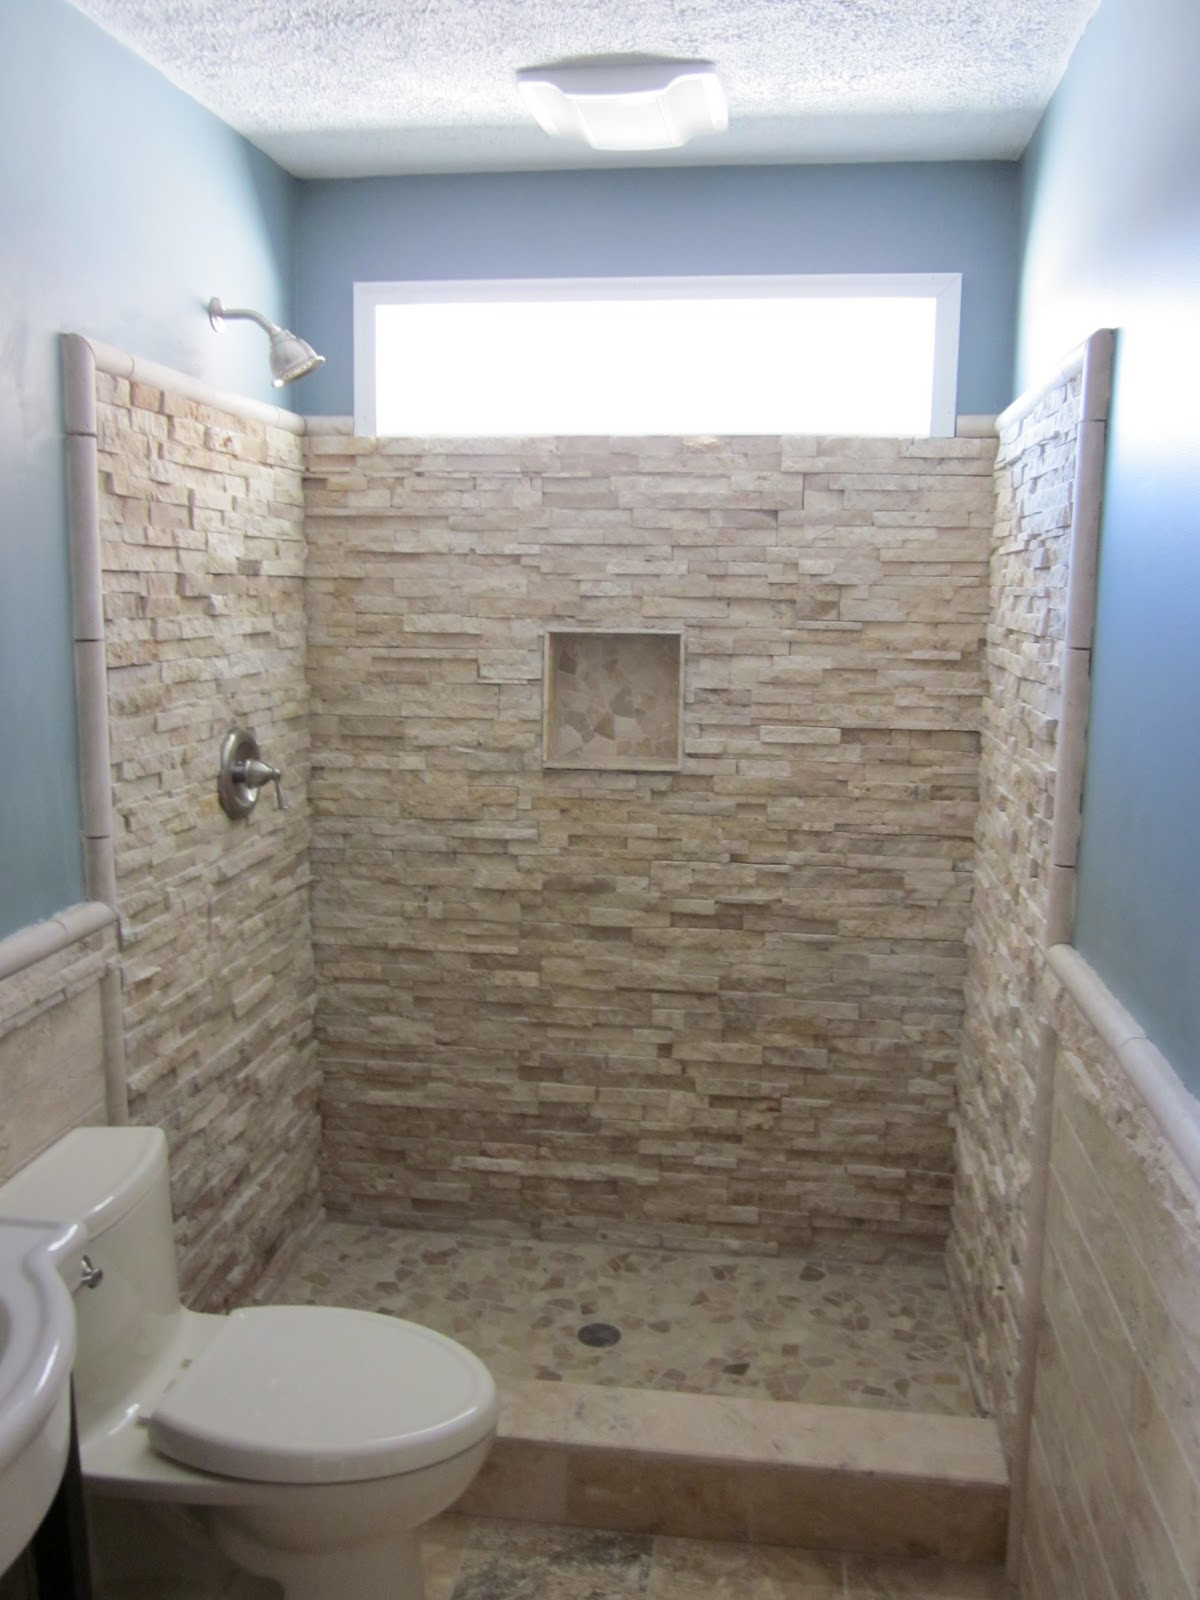 Bathroom Shower Stall Ideas
 Tile Bathroom Shower Stall Design Ideas